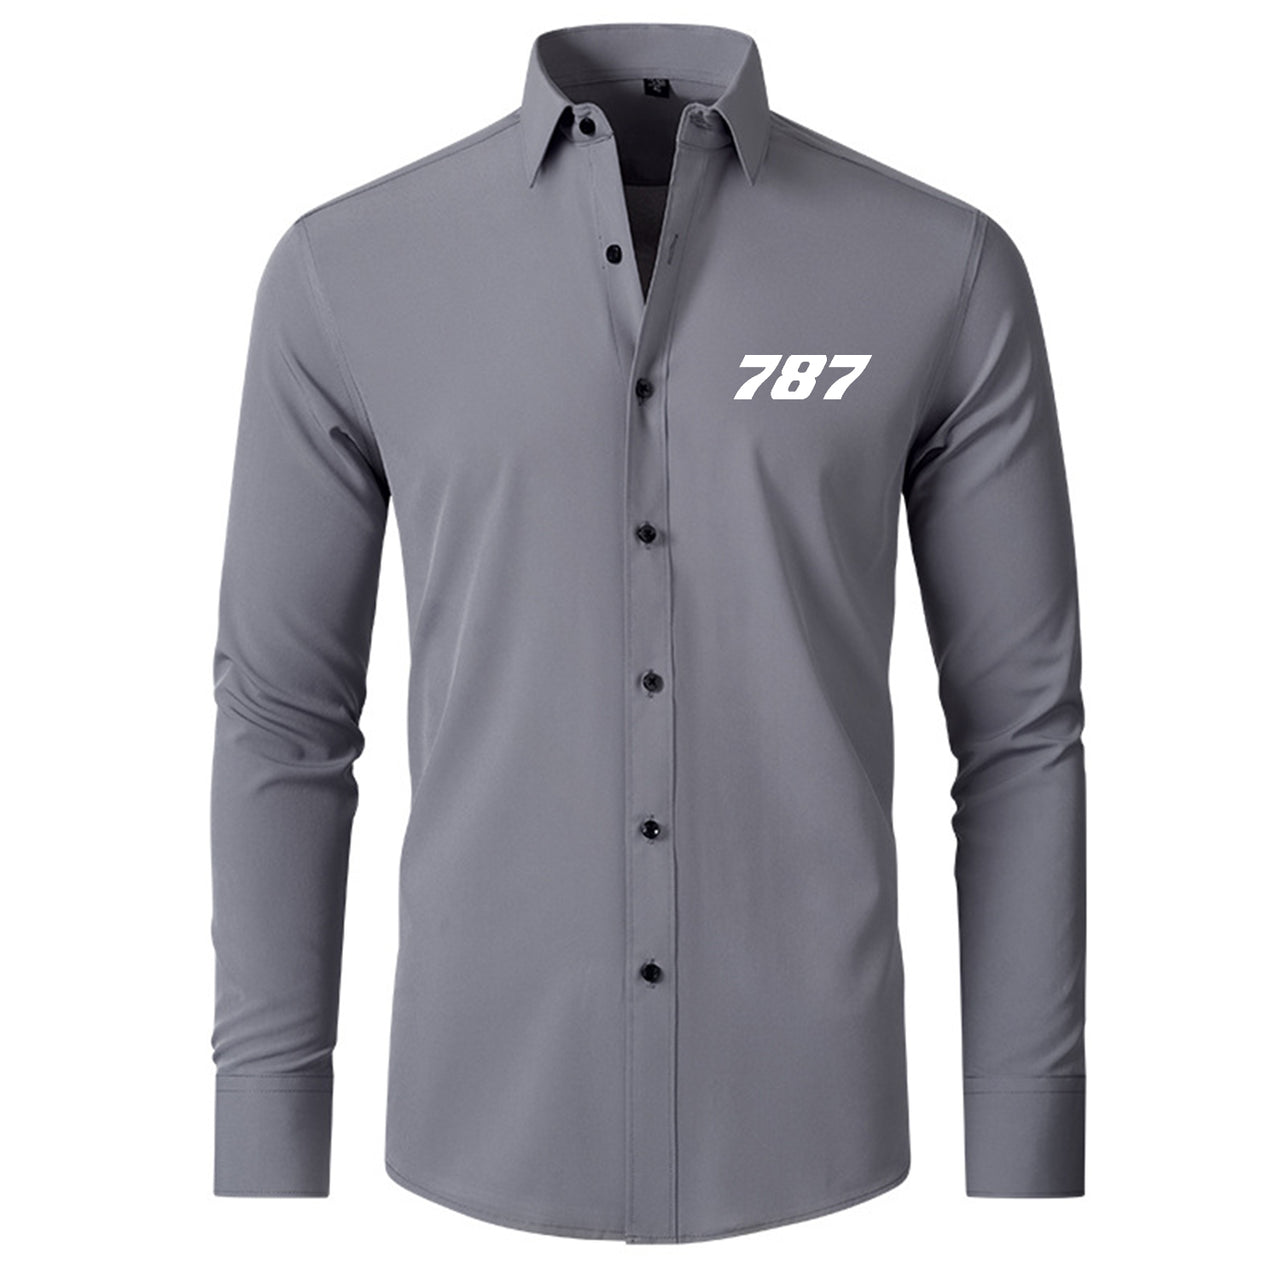 787 Flat Text Designed Long Sleeve Shirts